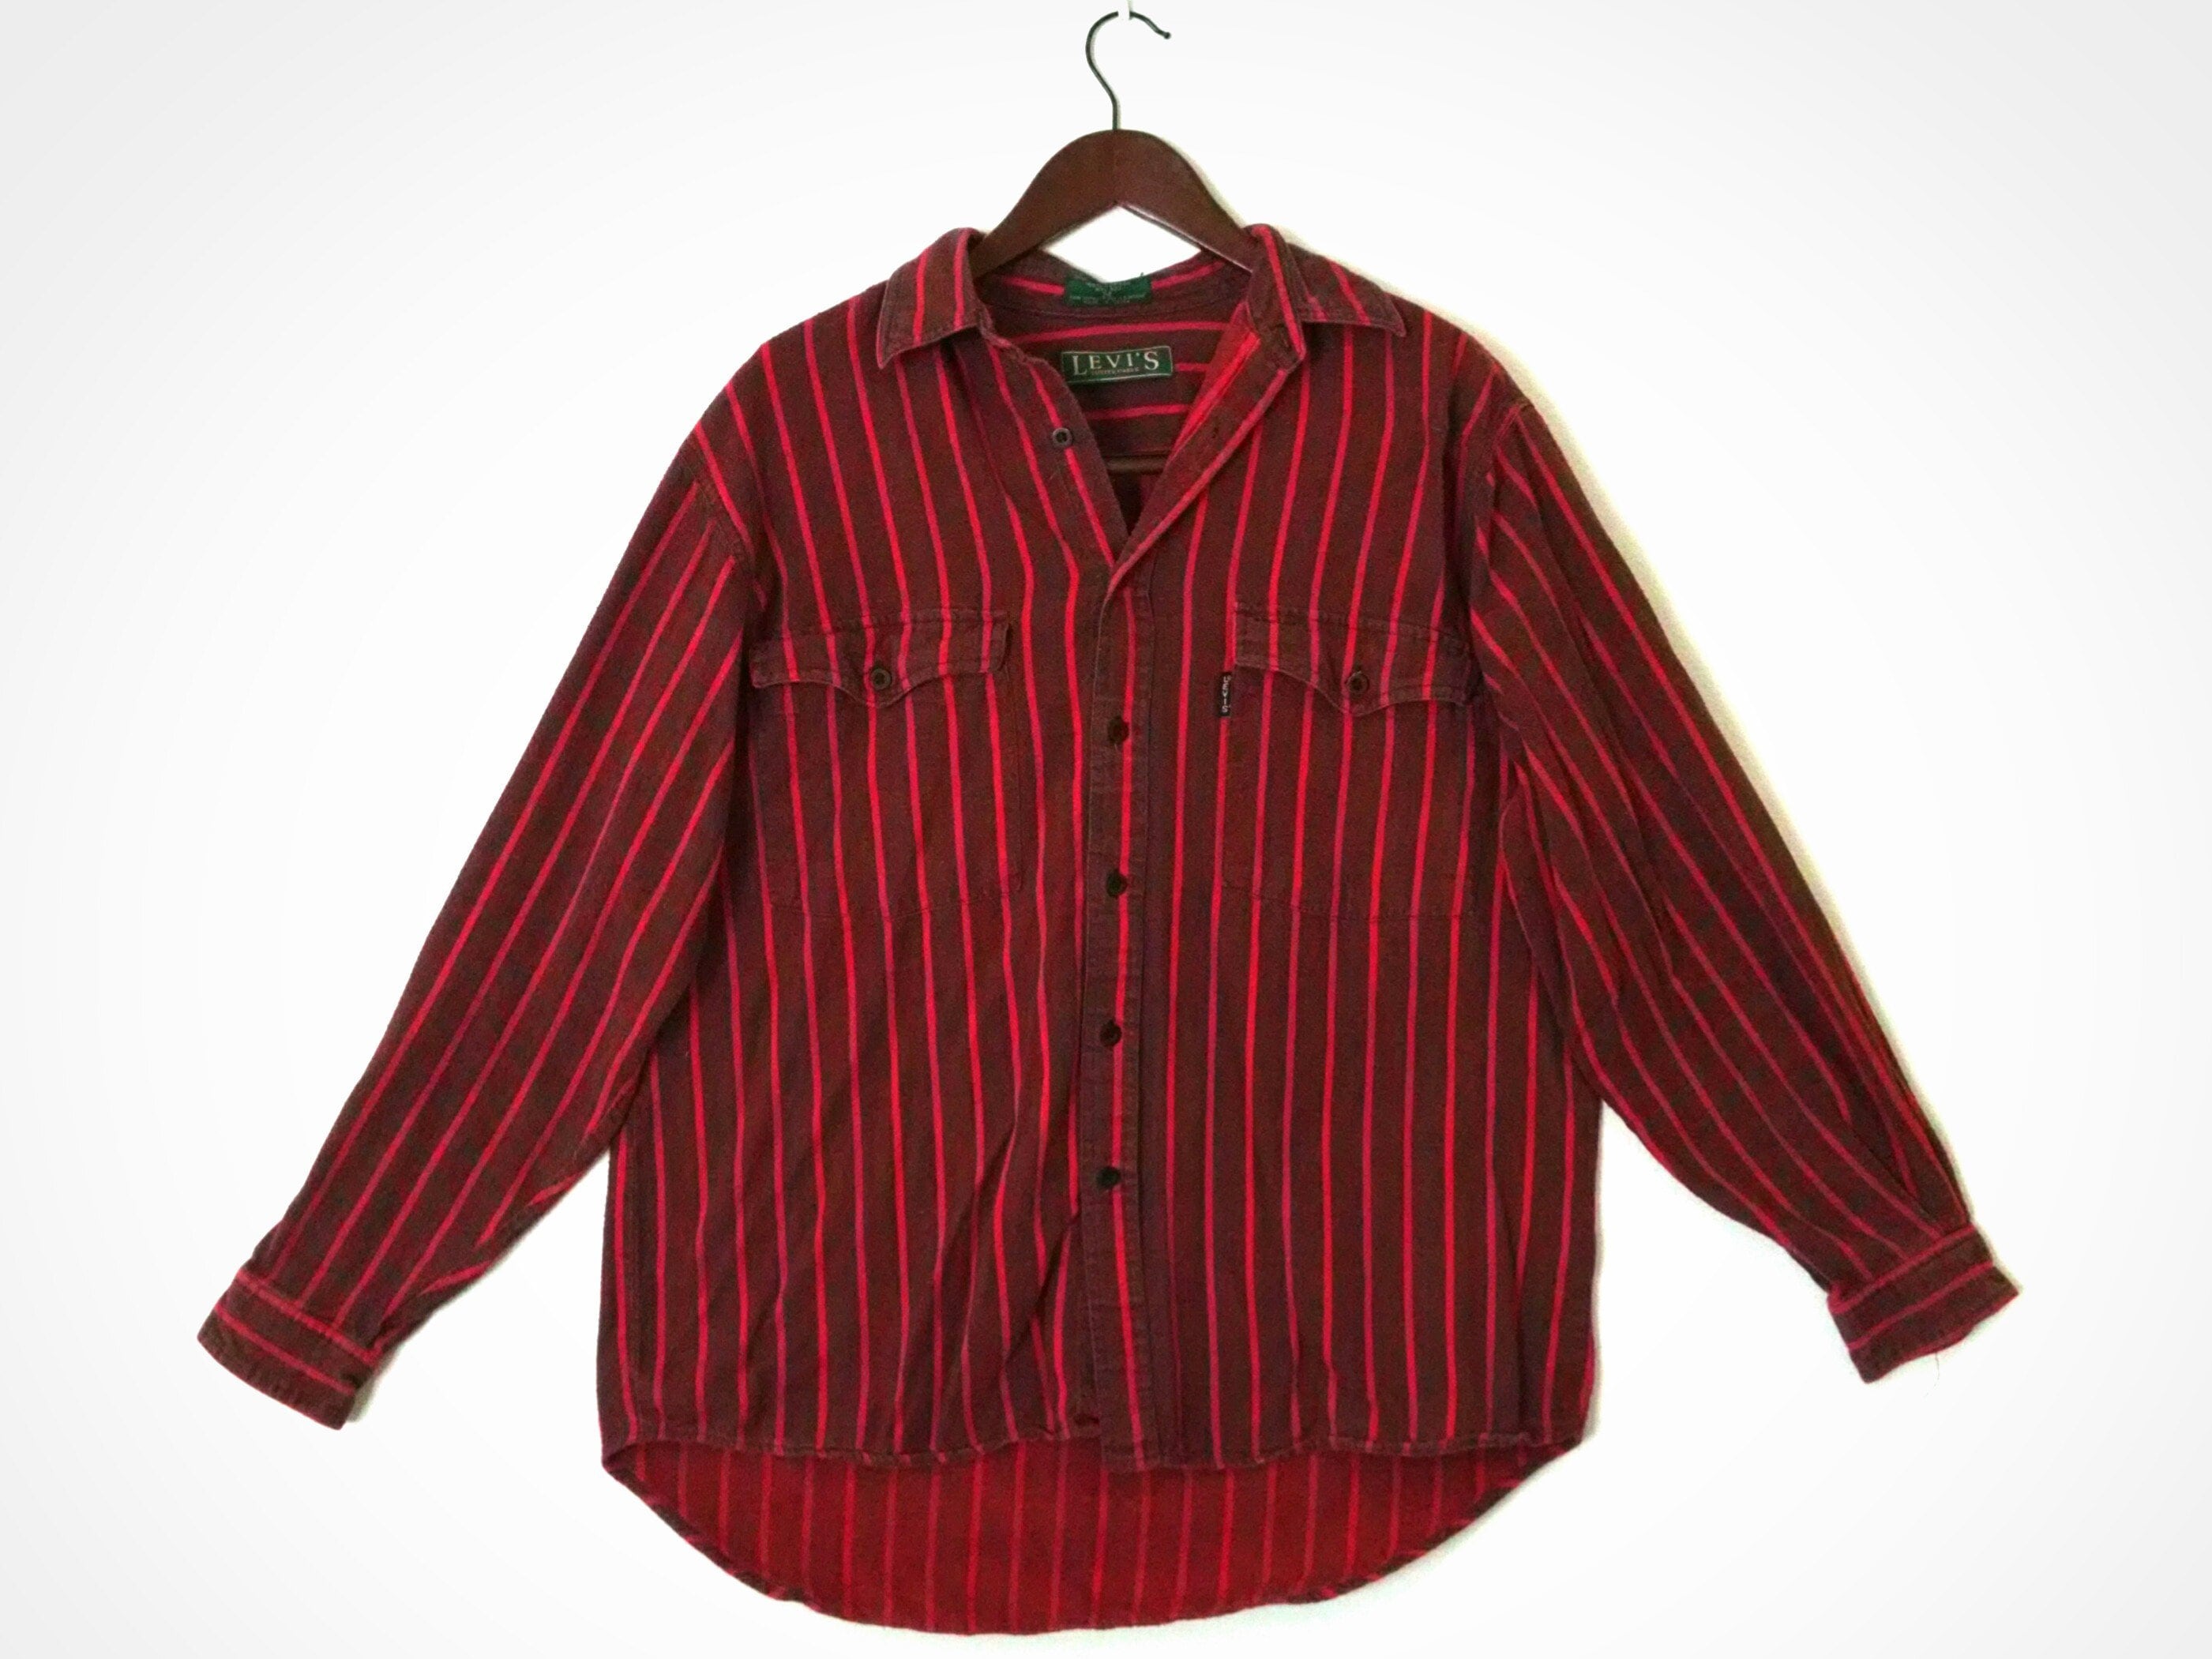 Kleding Herenkleding Overhemden & T-shirts Oxfords & Buttondowns 80s Levi's Pink Brown Striped Shirt Small/Medium 